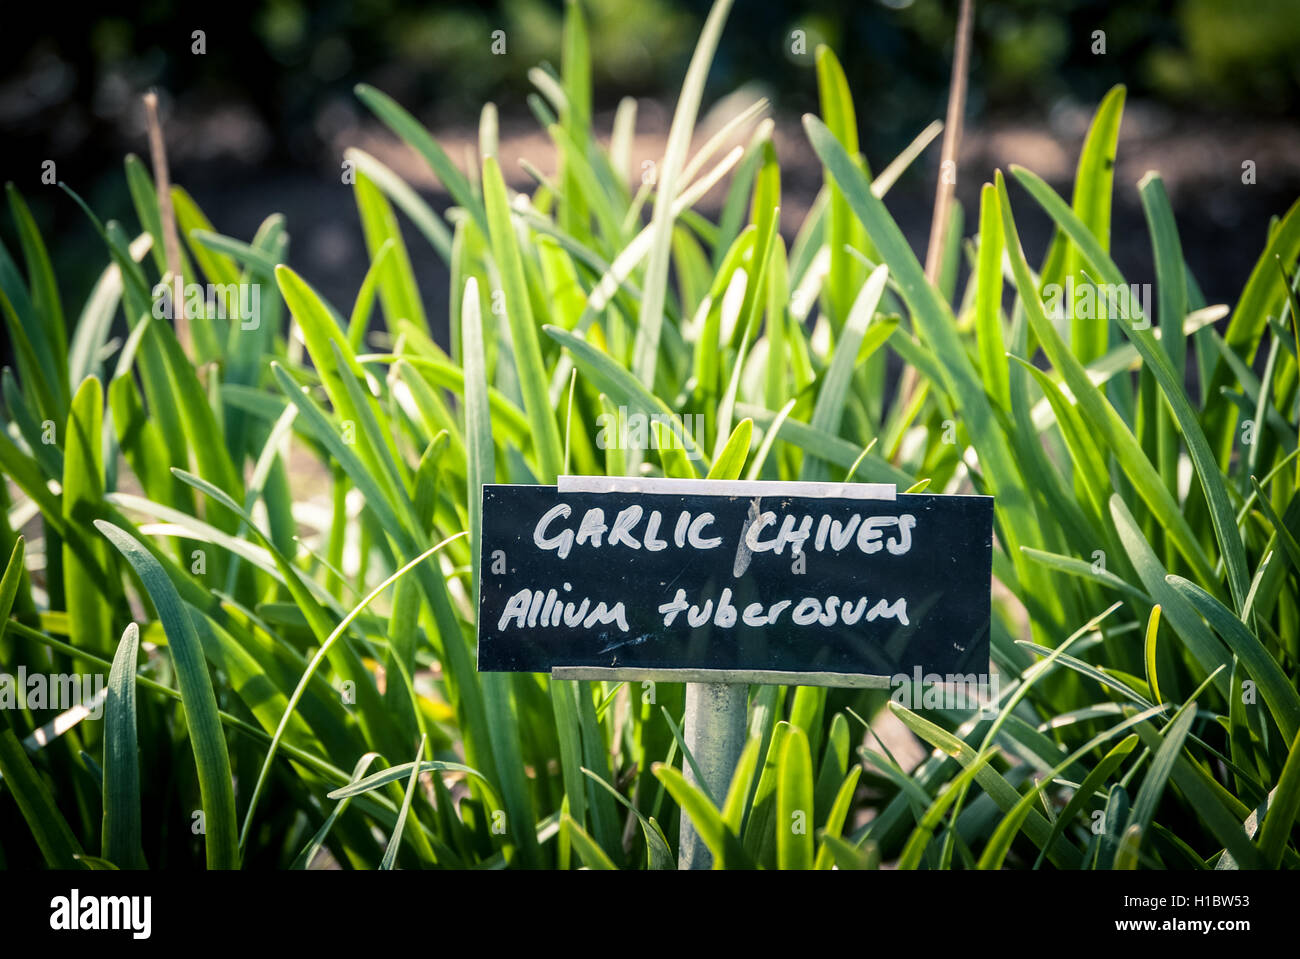 garlic chives (allium tuberosum) growing in a garden Stock Photo